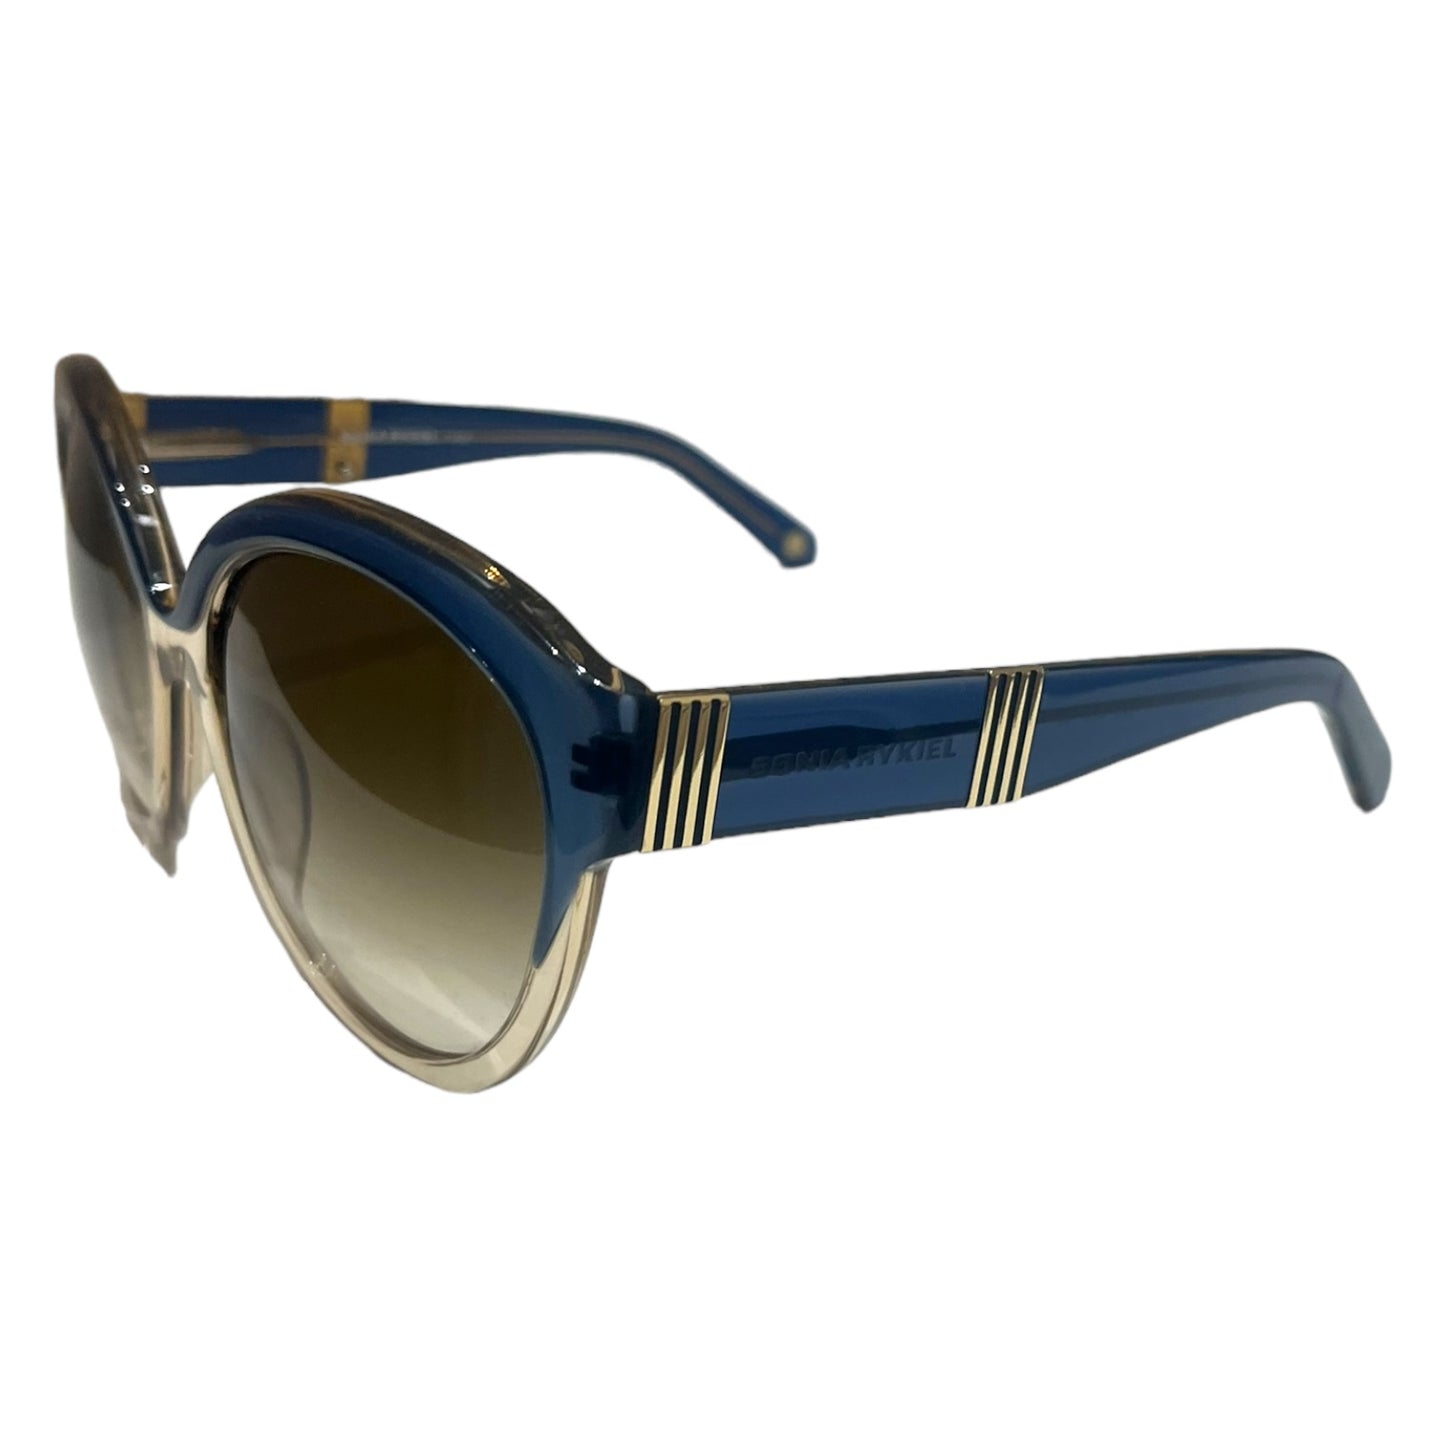 Sonia Rykiel Blue and Gold Sunglasses